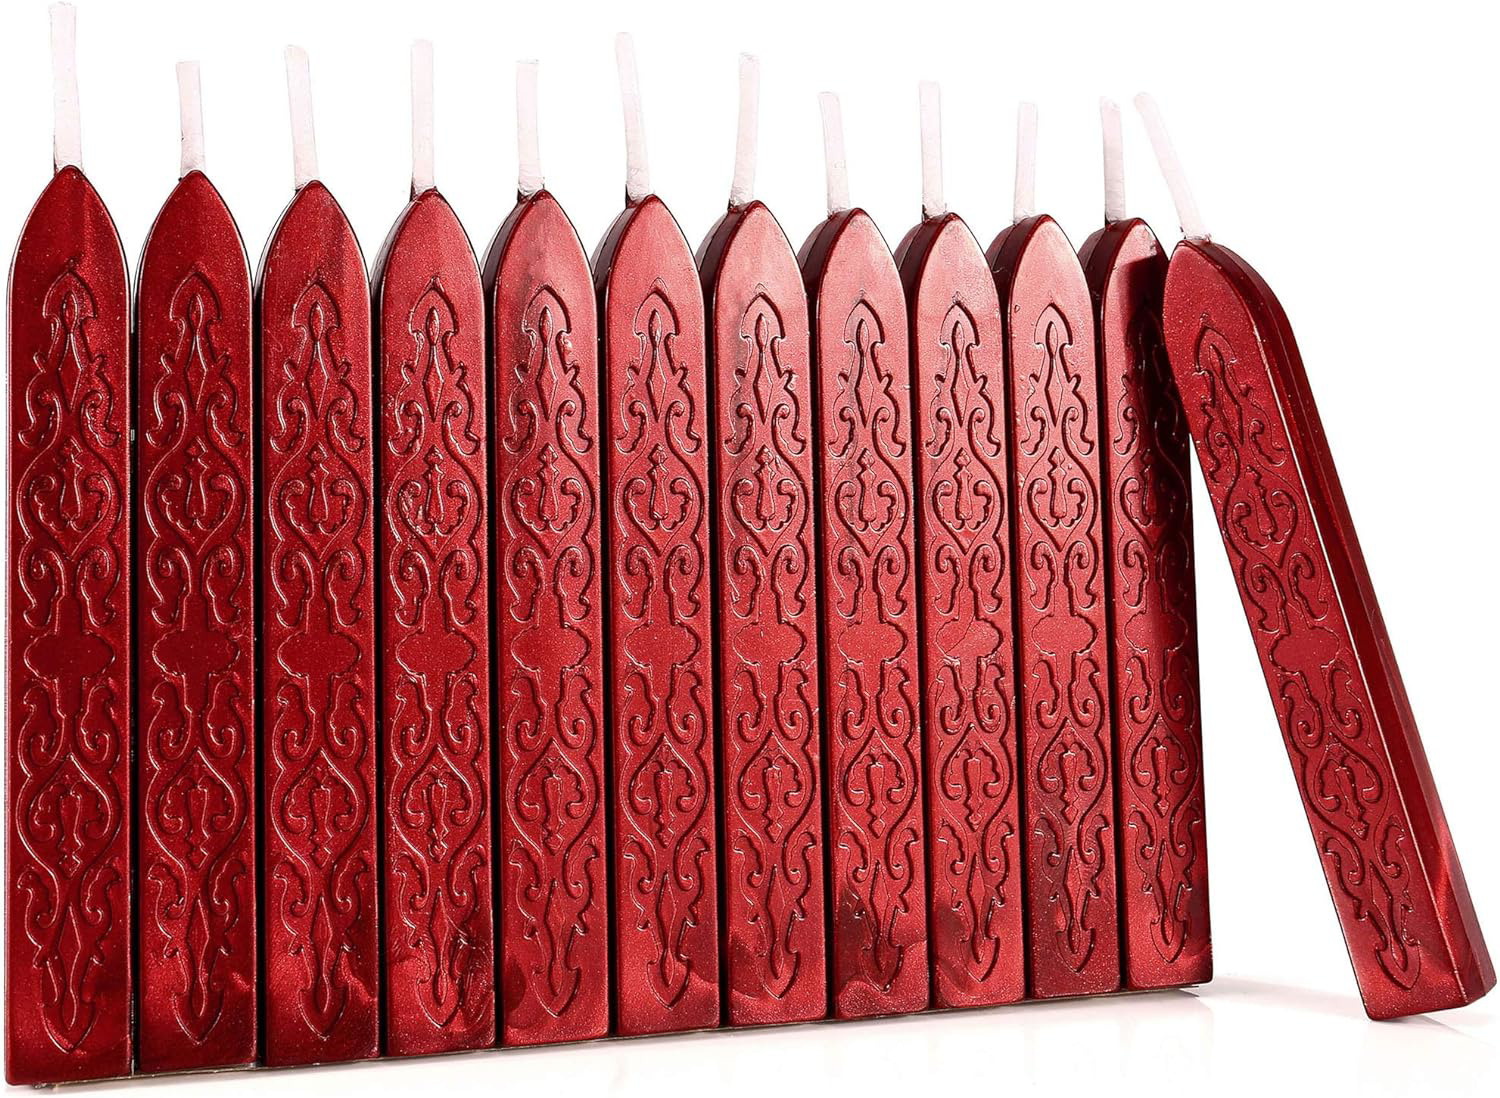 Mornajina 12 Pieces Metalic Red Sealing Wax Sticks with Wicks, Vintage Wax Seal